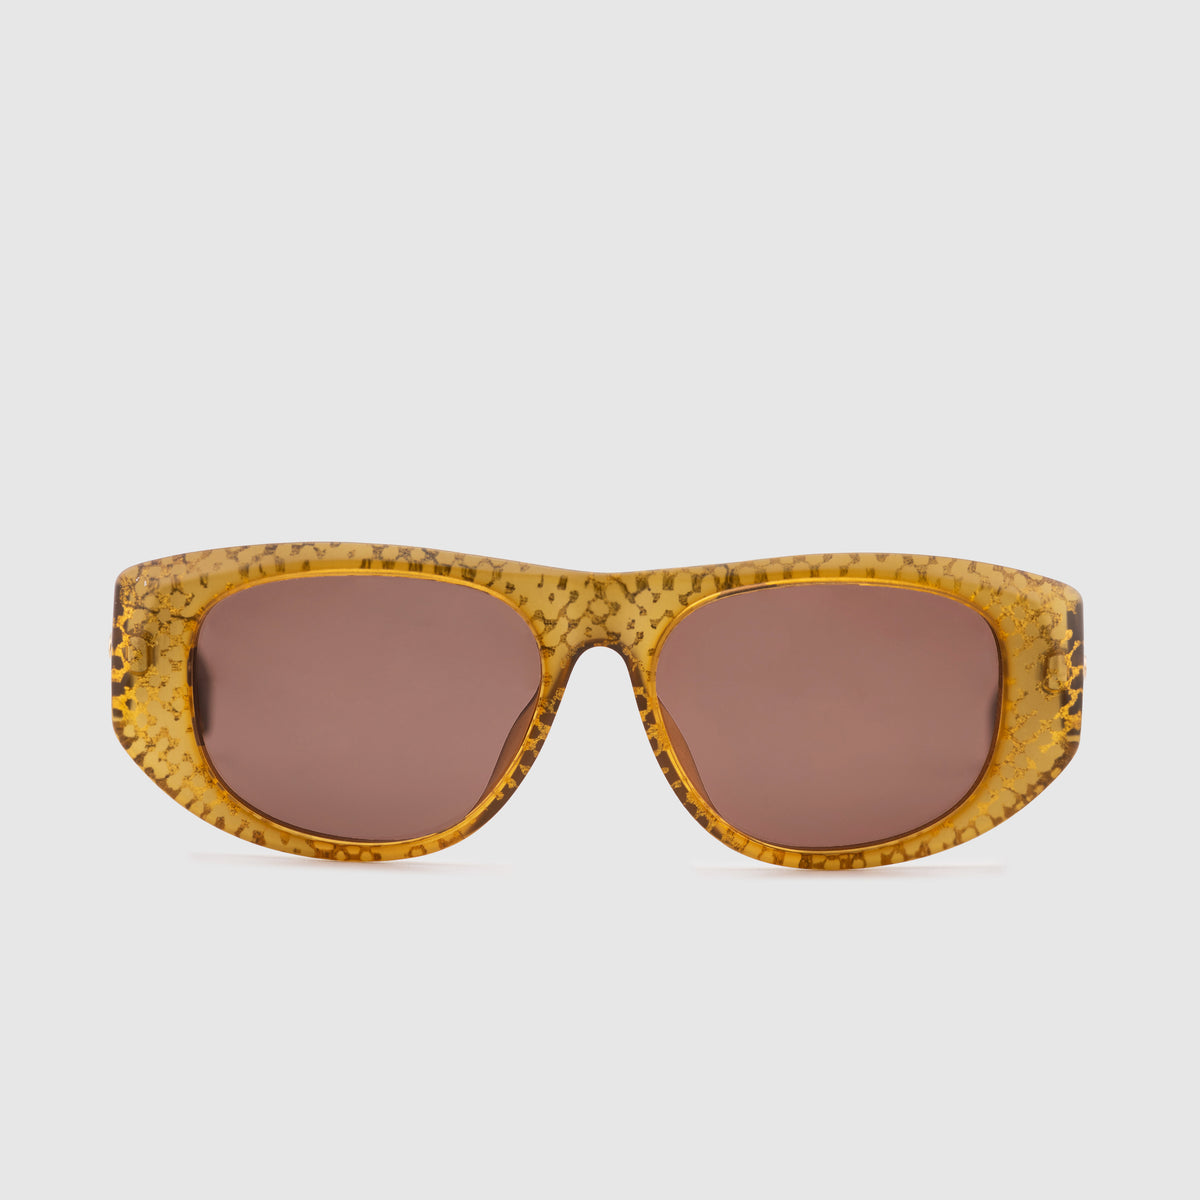 Vintage Christian Dior Sunglasses circa 1980's